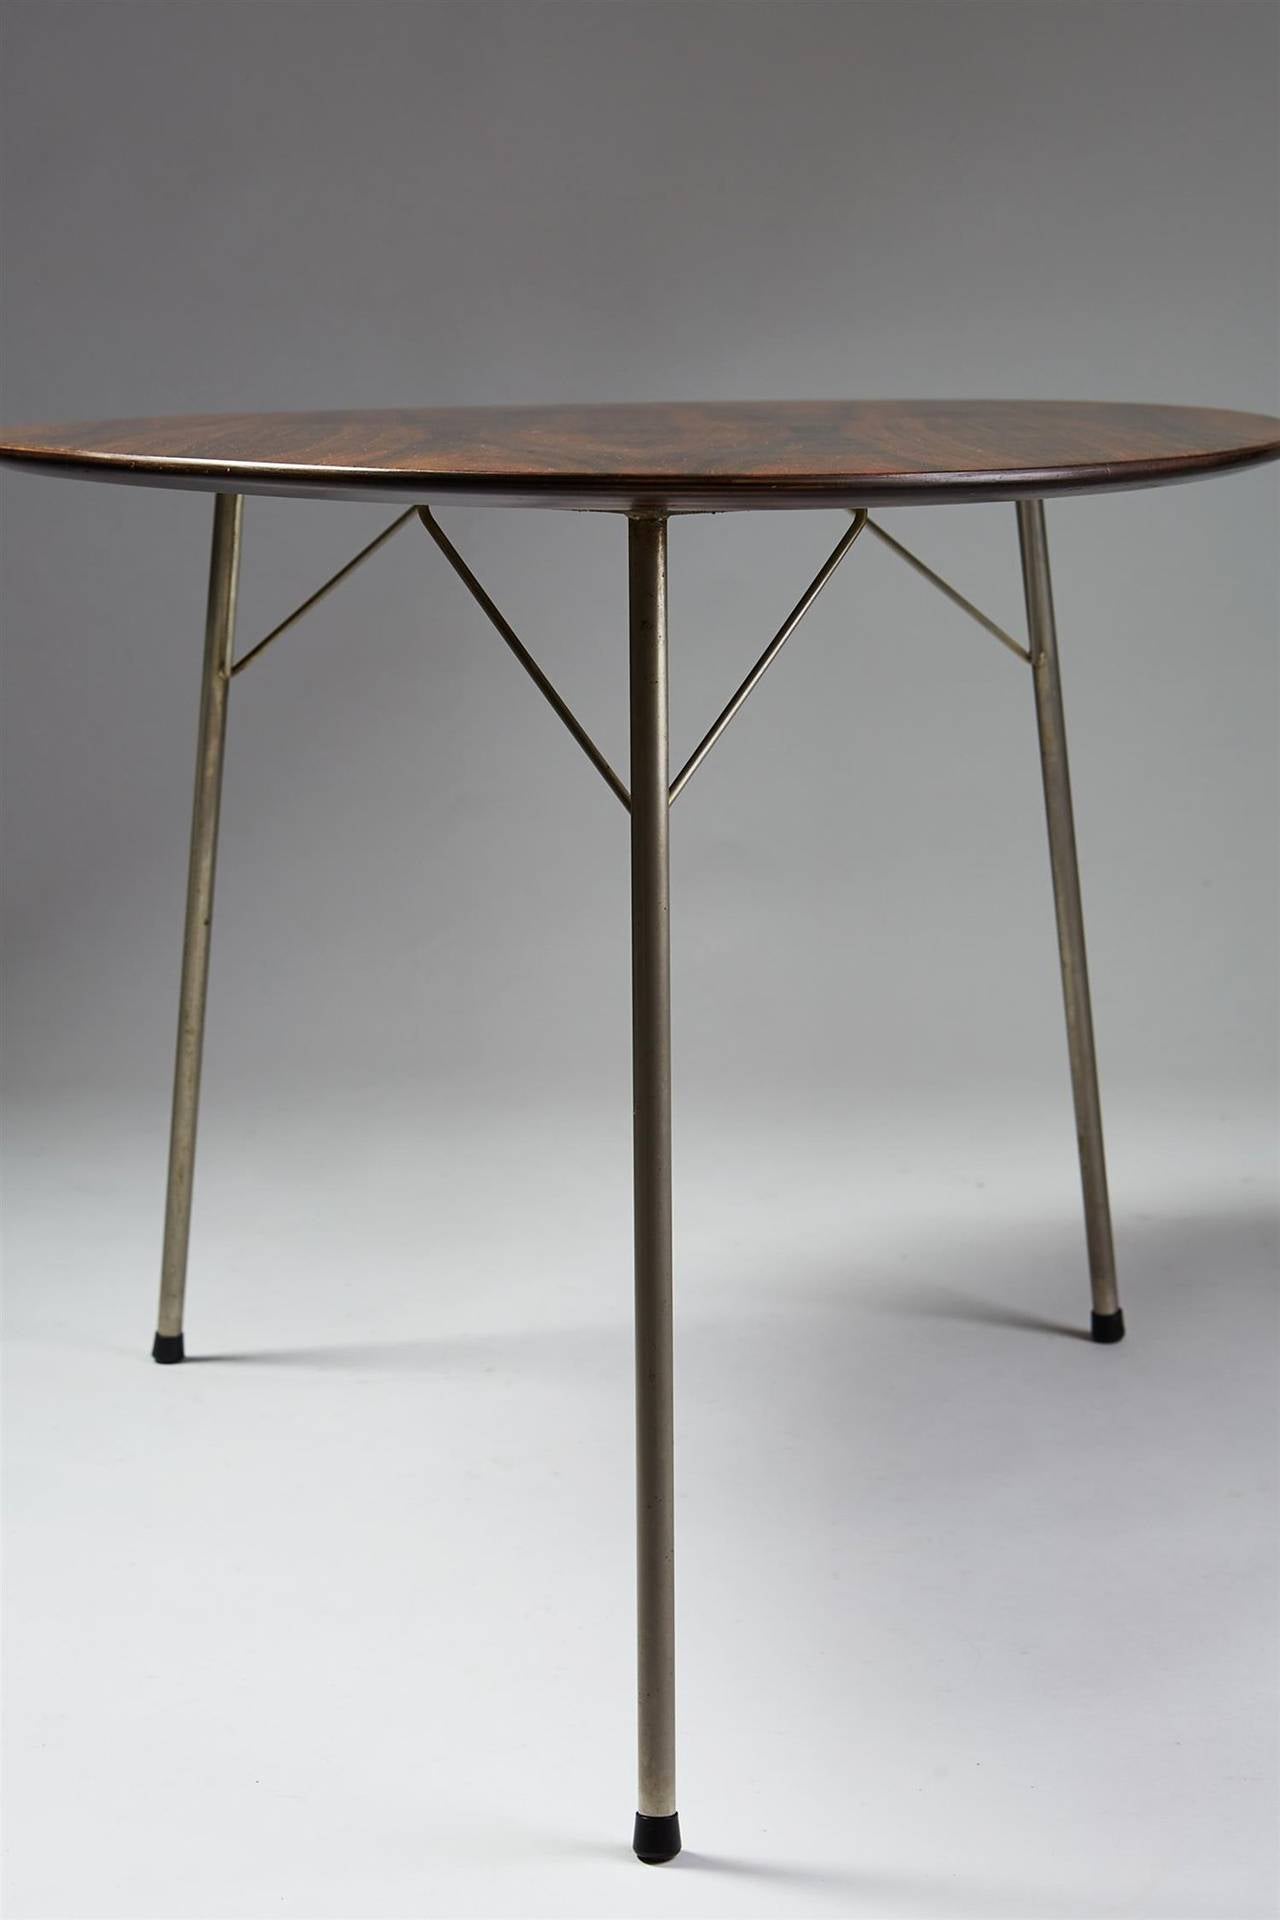 Scandinavian Modern Dining Table and Chairs Designed by Arne Jacobsen for Fritz Hansen, Denmark